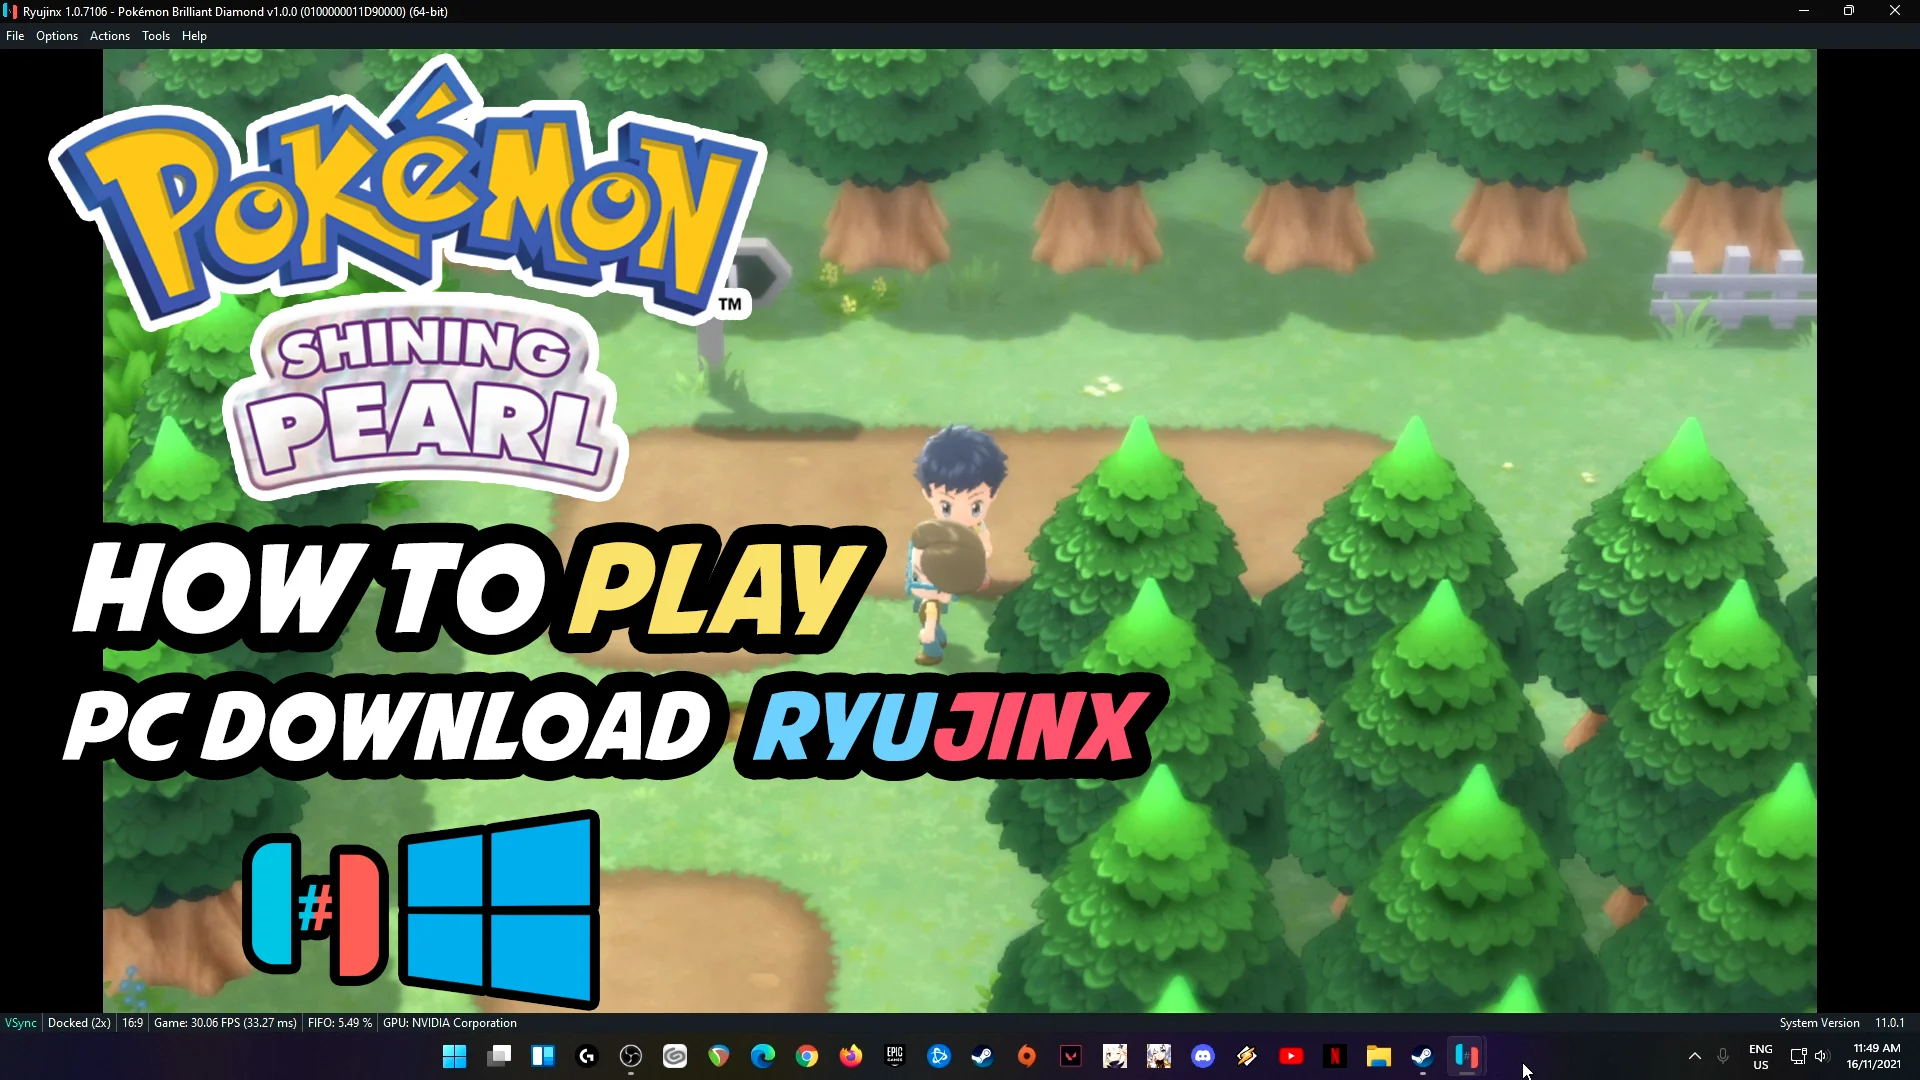 How to Play Pokémon Brilliant Diamond Shining Pearl on PC for FREE [60FPS]  - Yuzu Switch Emulator on Vimeo